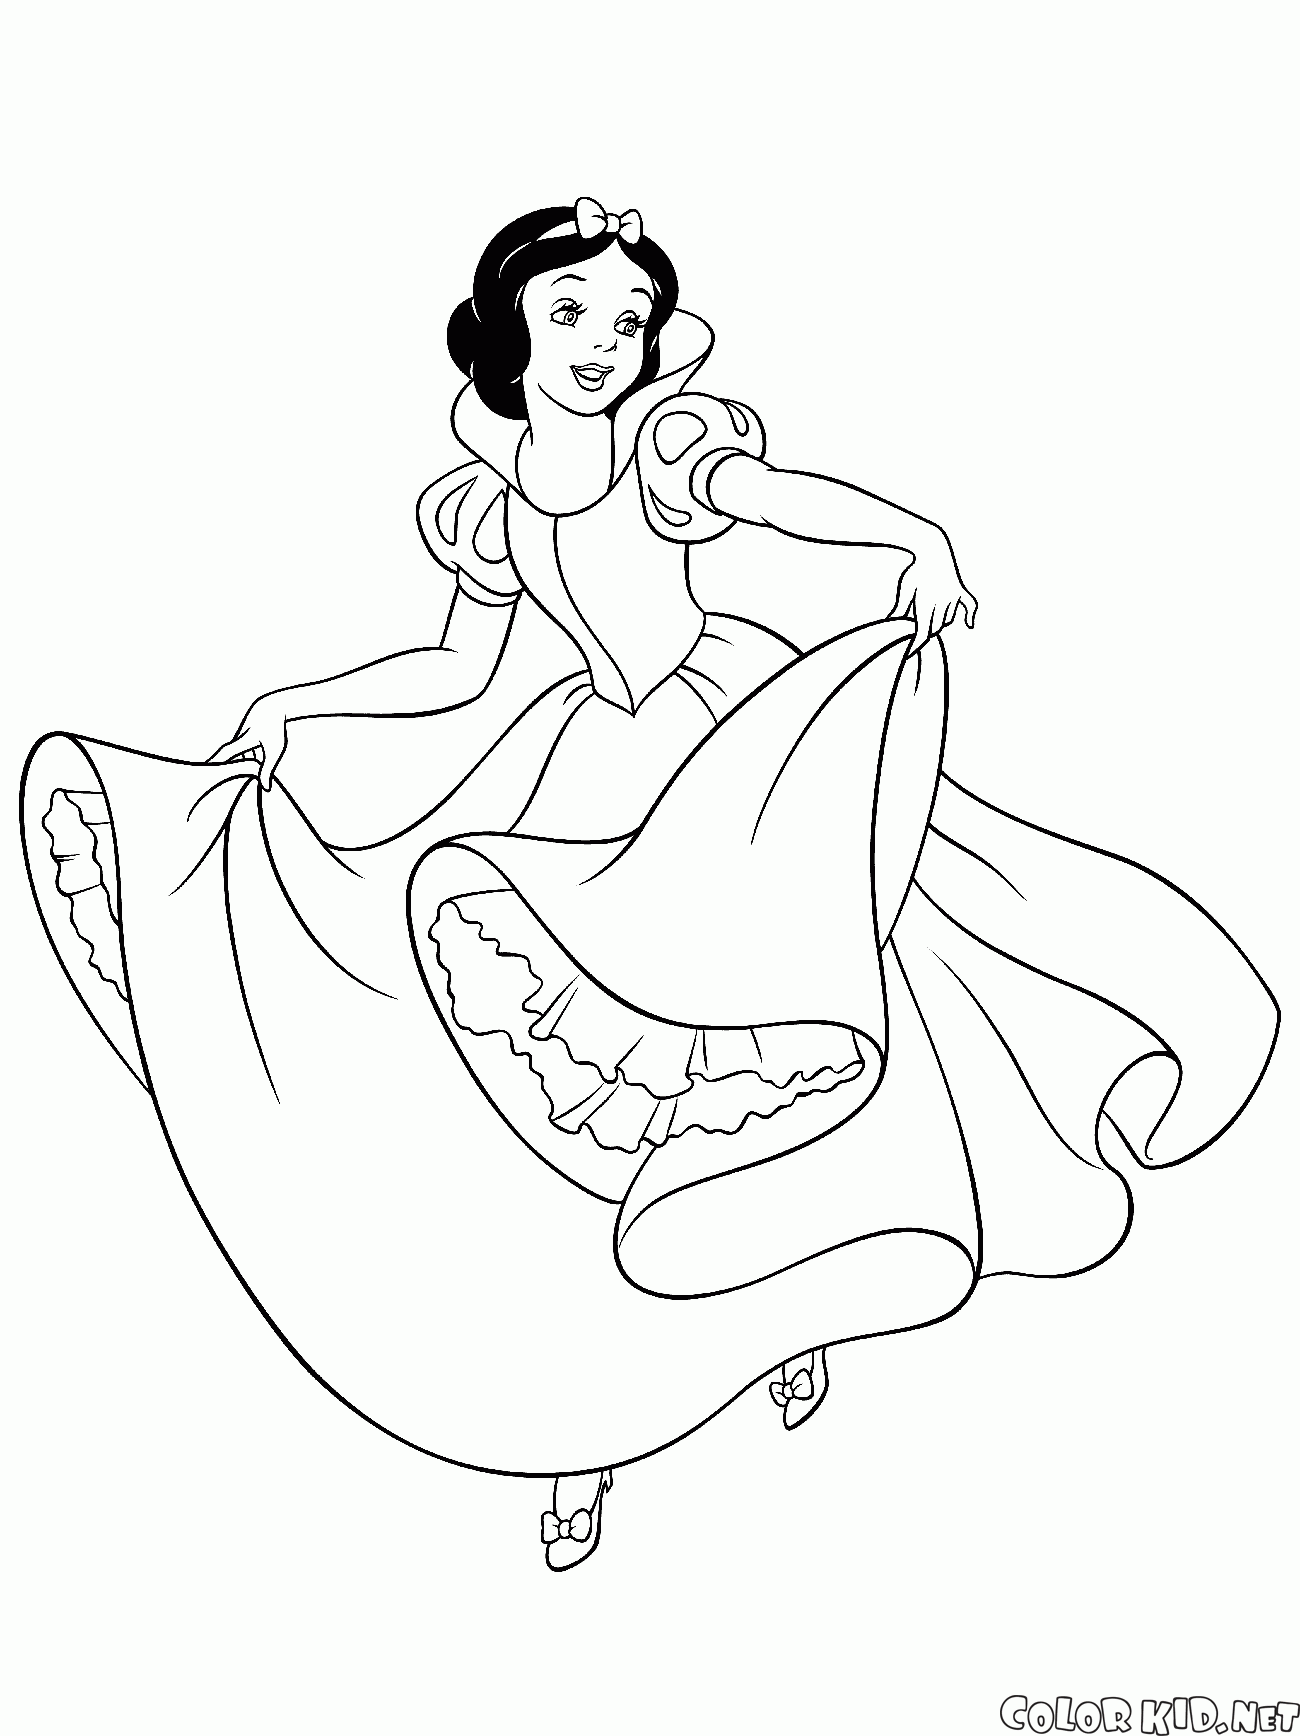 Snow White dancing